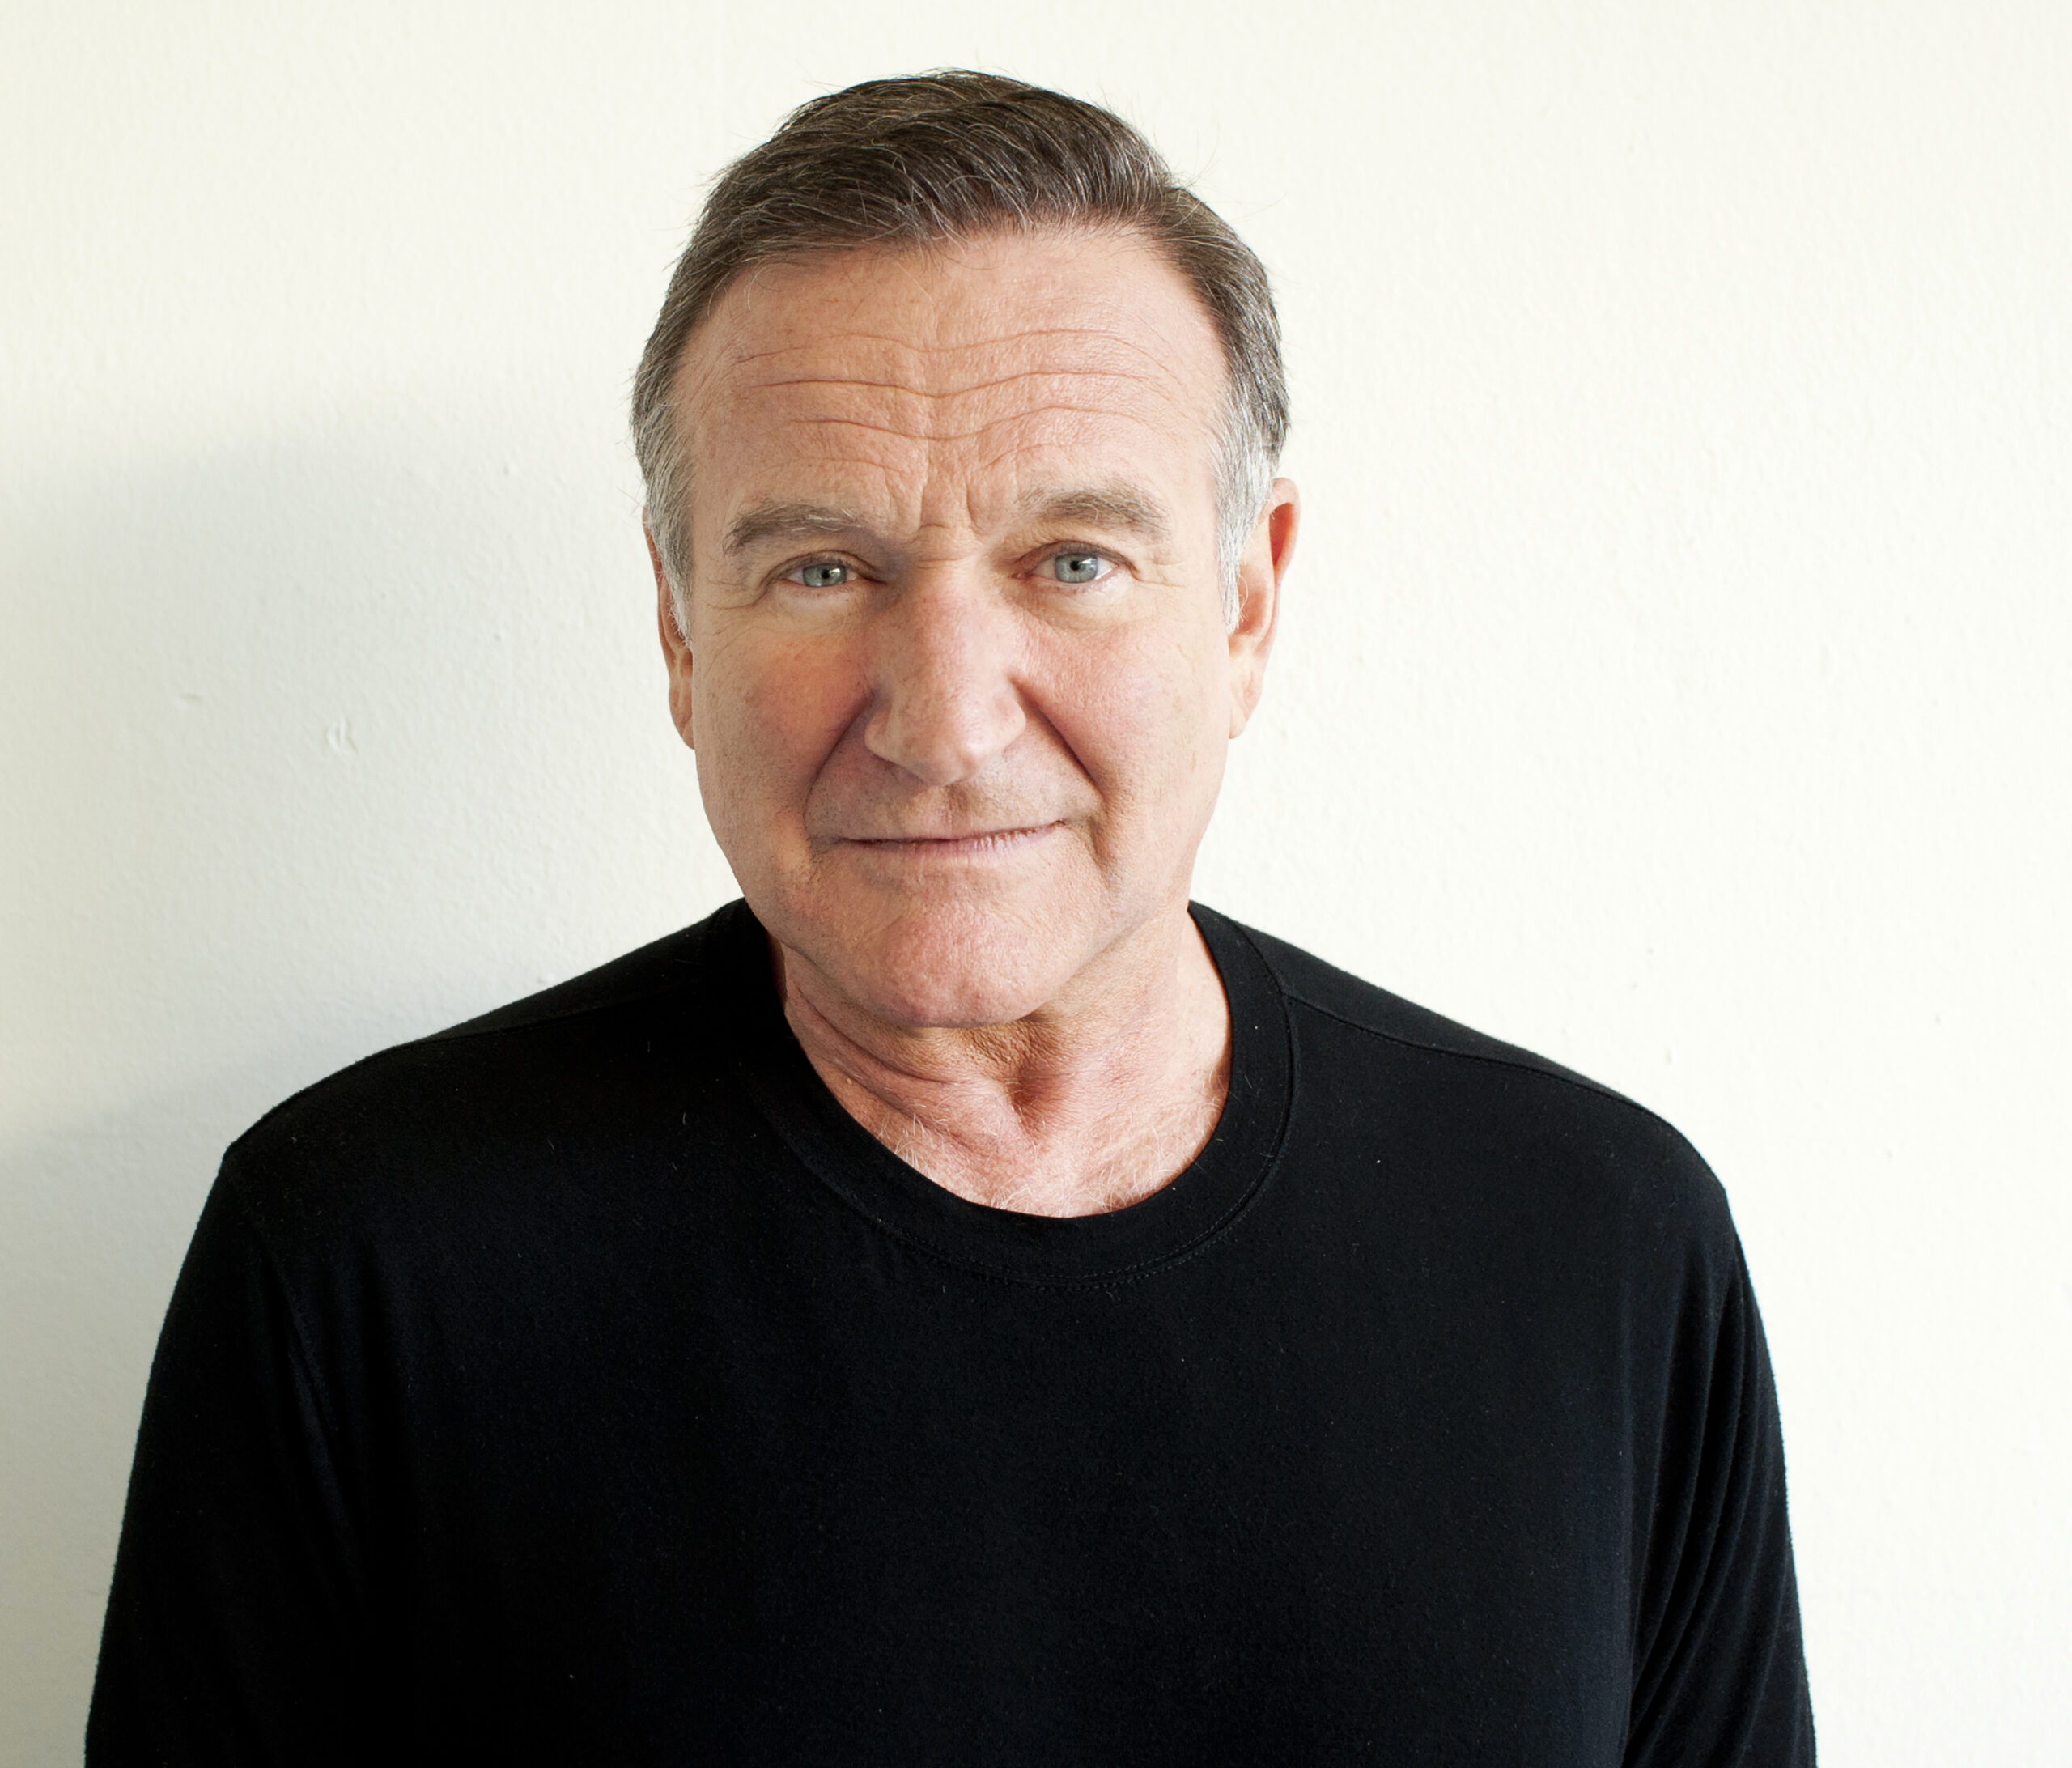 Robin Williams Portrait Comedian Actor